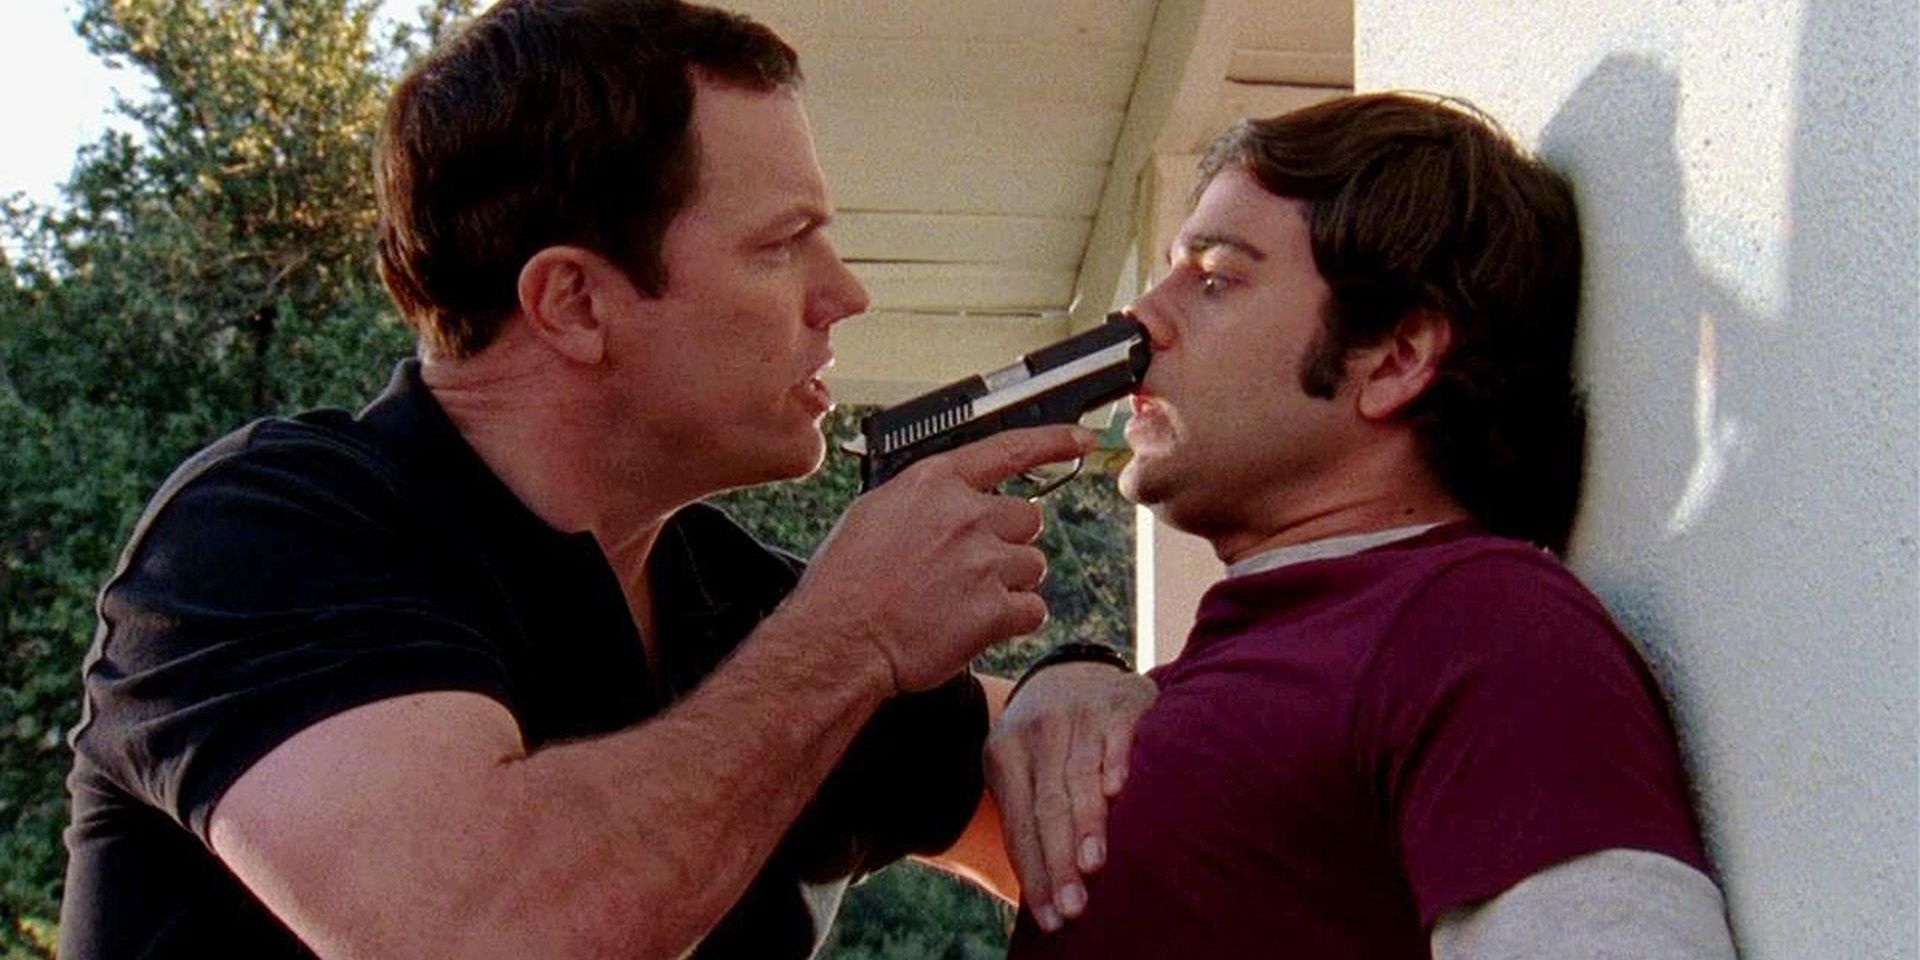 Casey holds a gun to Chuck's face